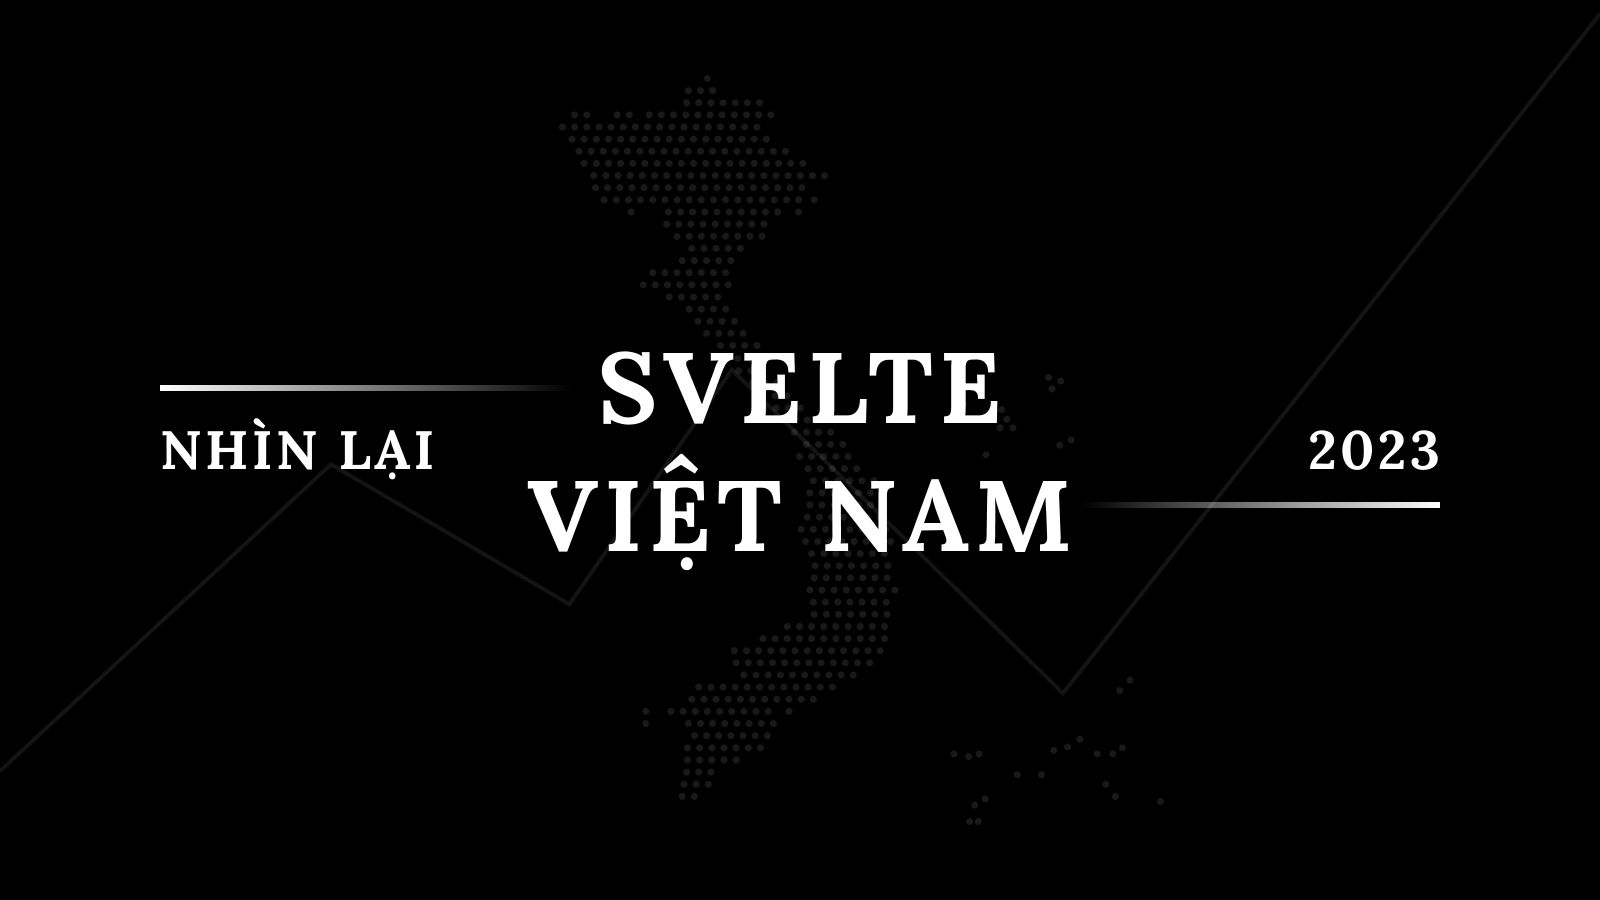 video thumbnail: State of Svelte Vietnam 2023